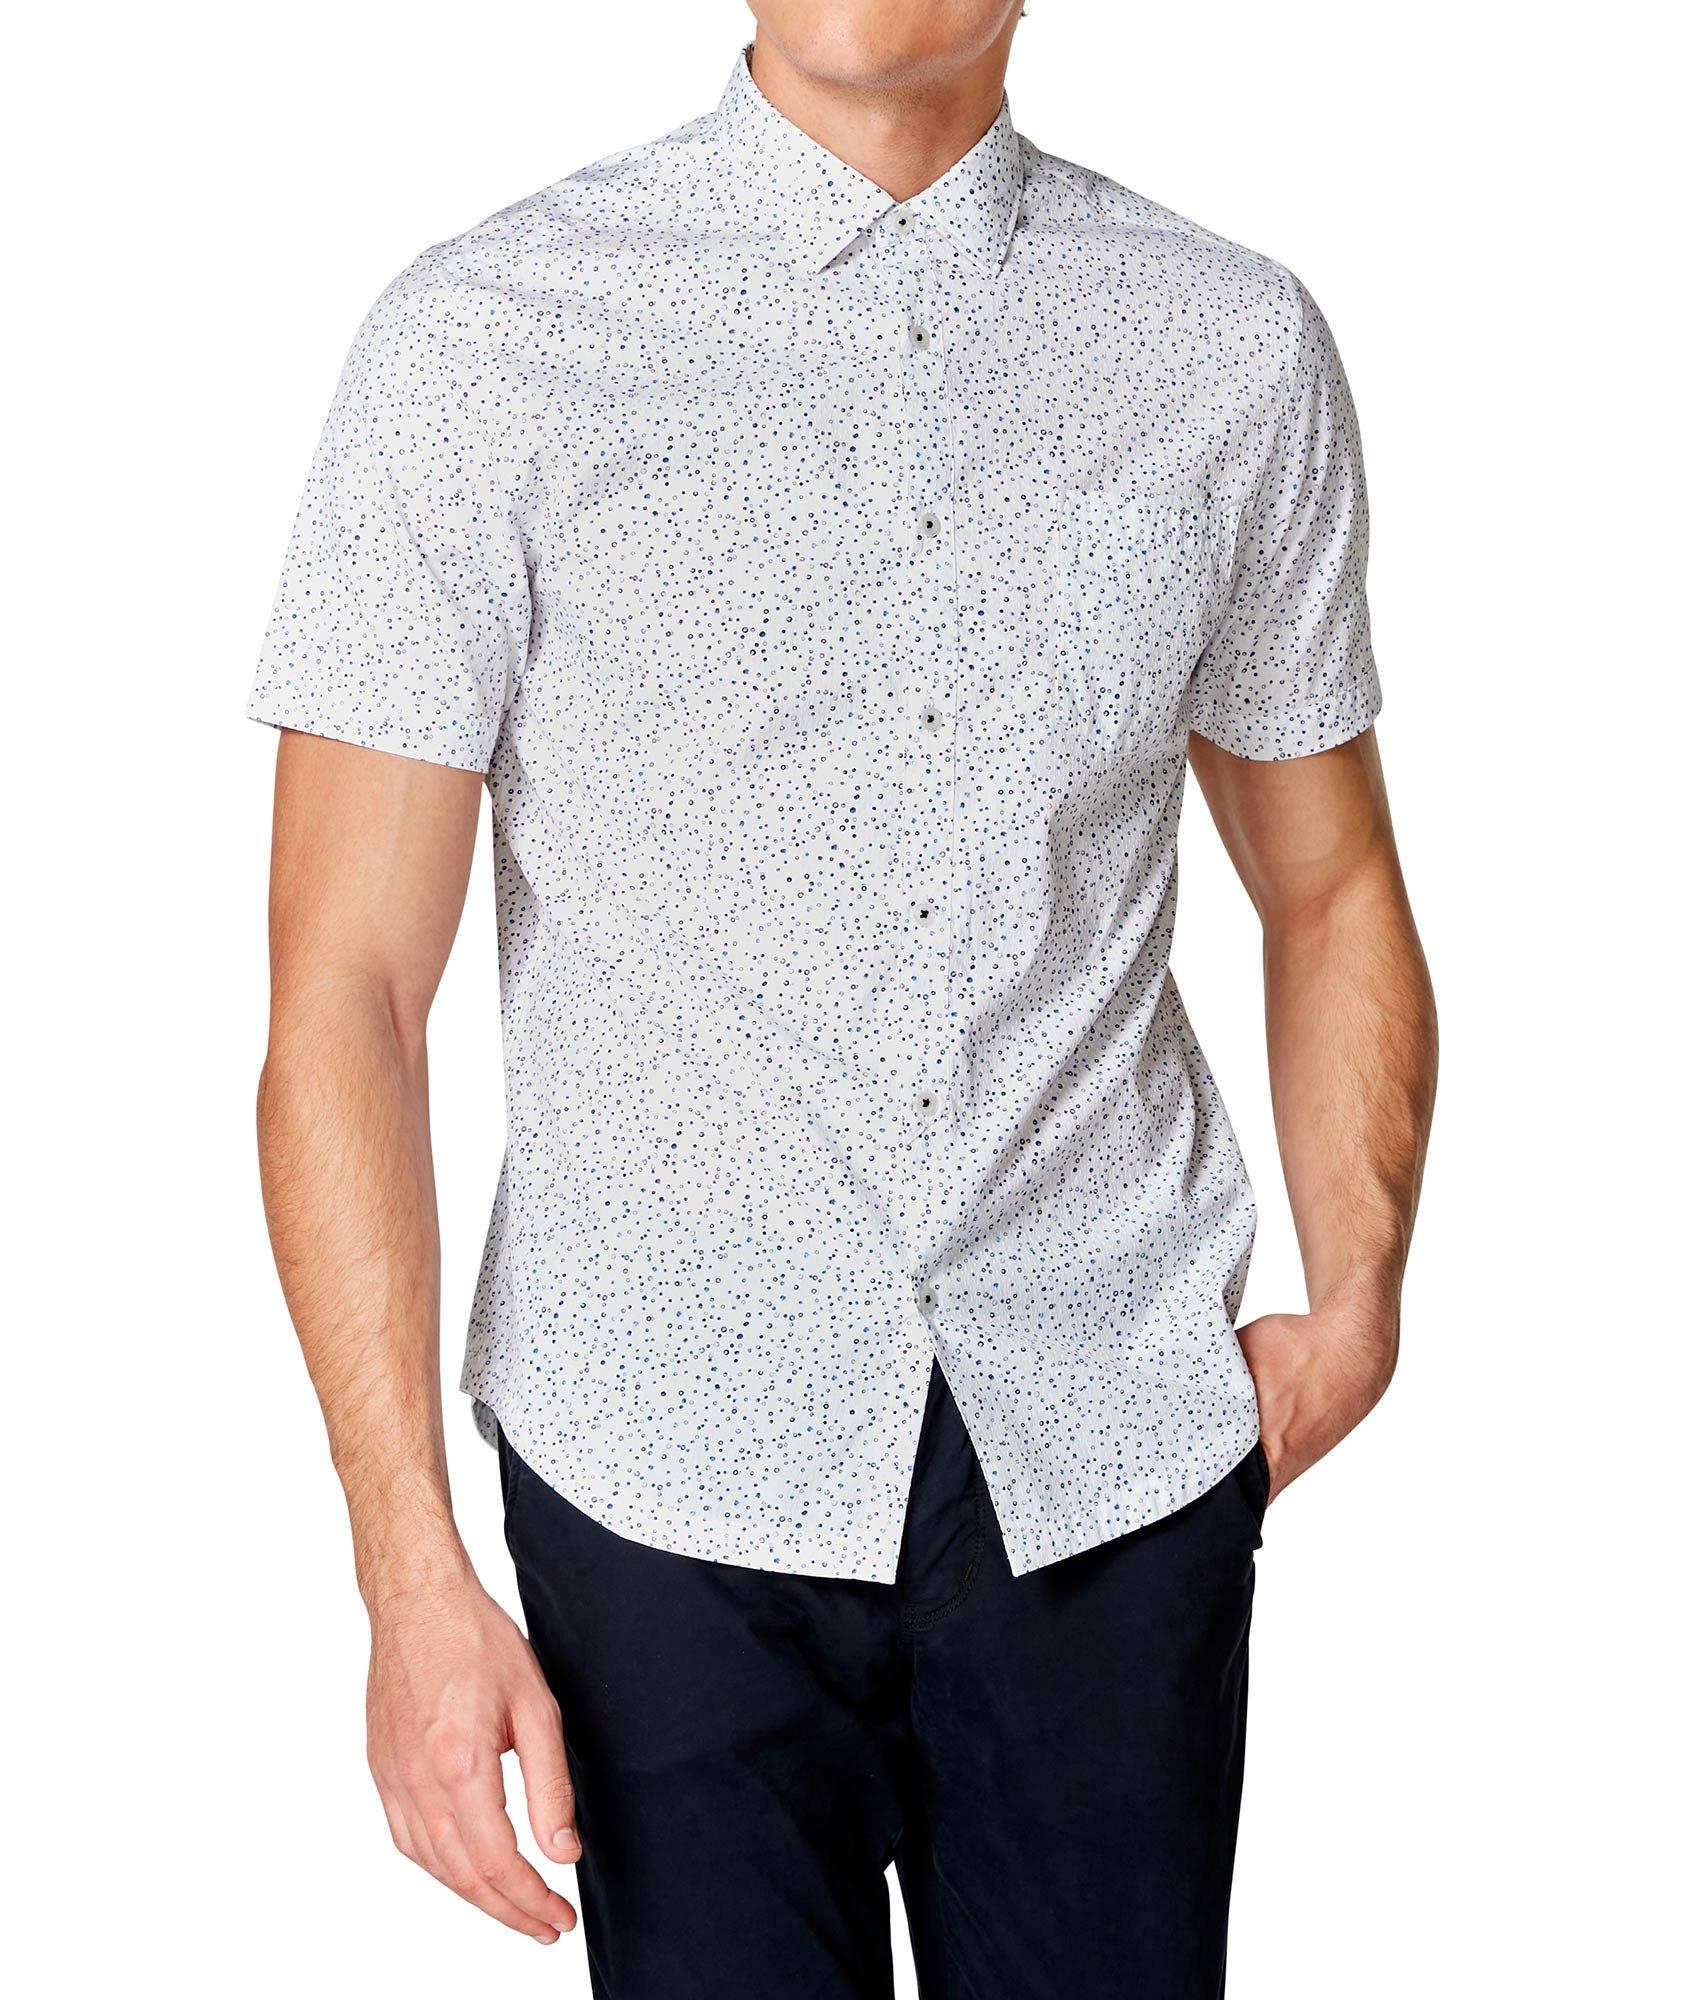 Short-Sleeve Dotted Shirt image 0